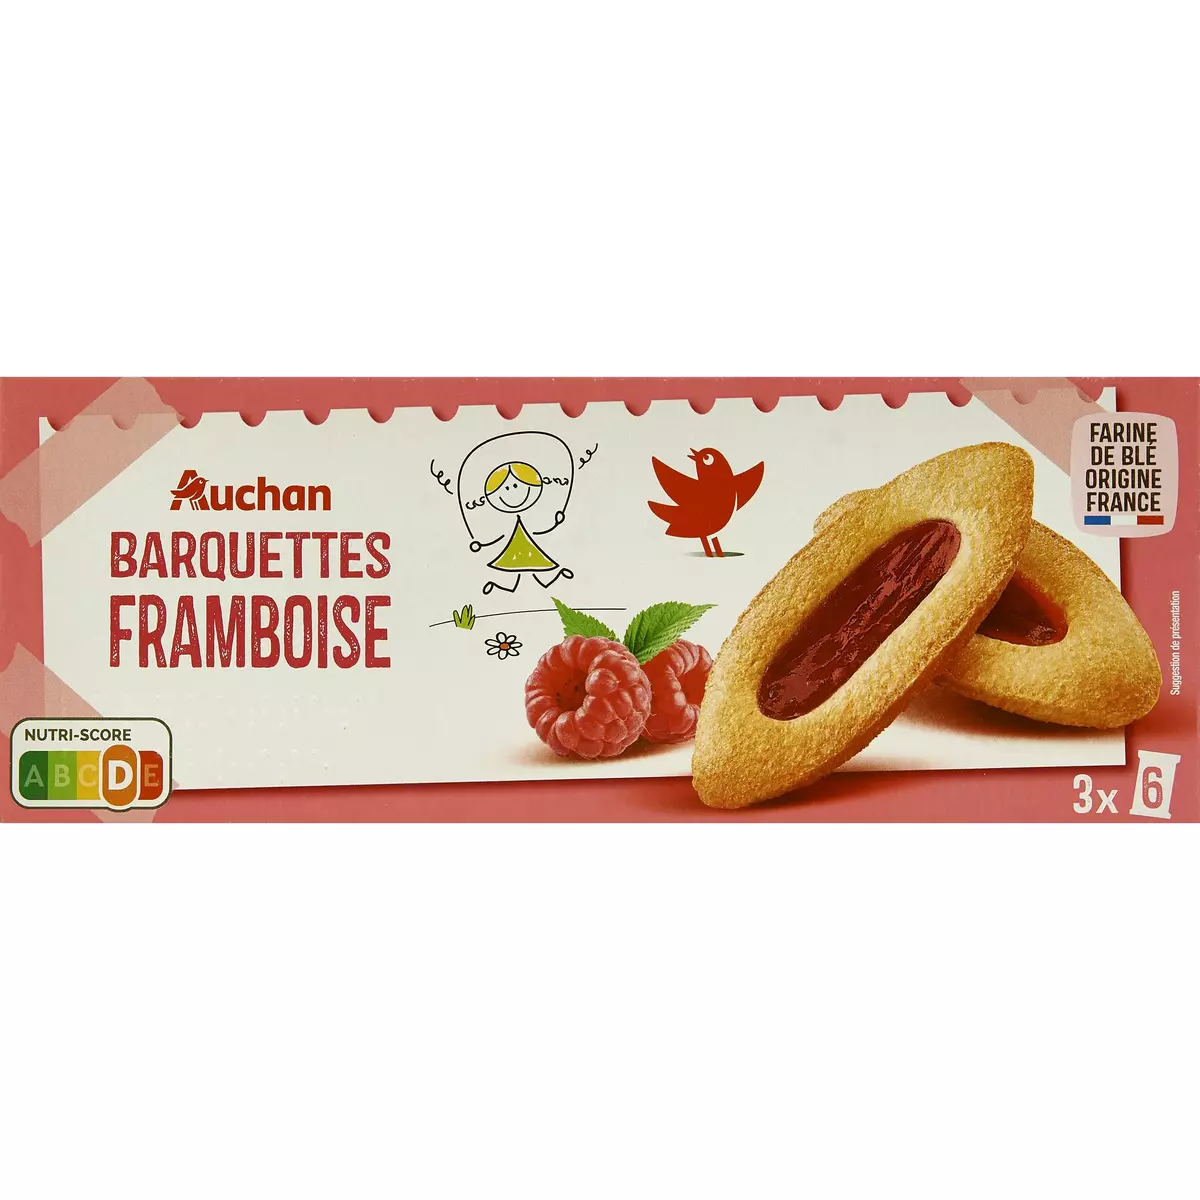 AUCHAN Biscuits barquettes framboise 3 sachets de 6 biscuits 120g